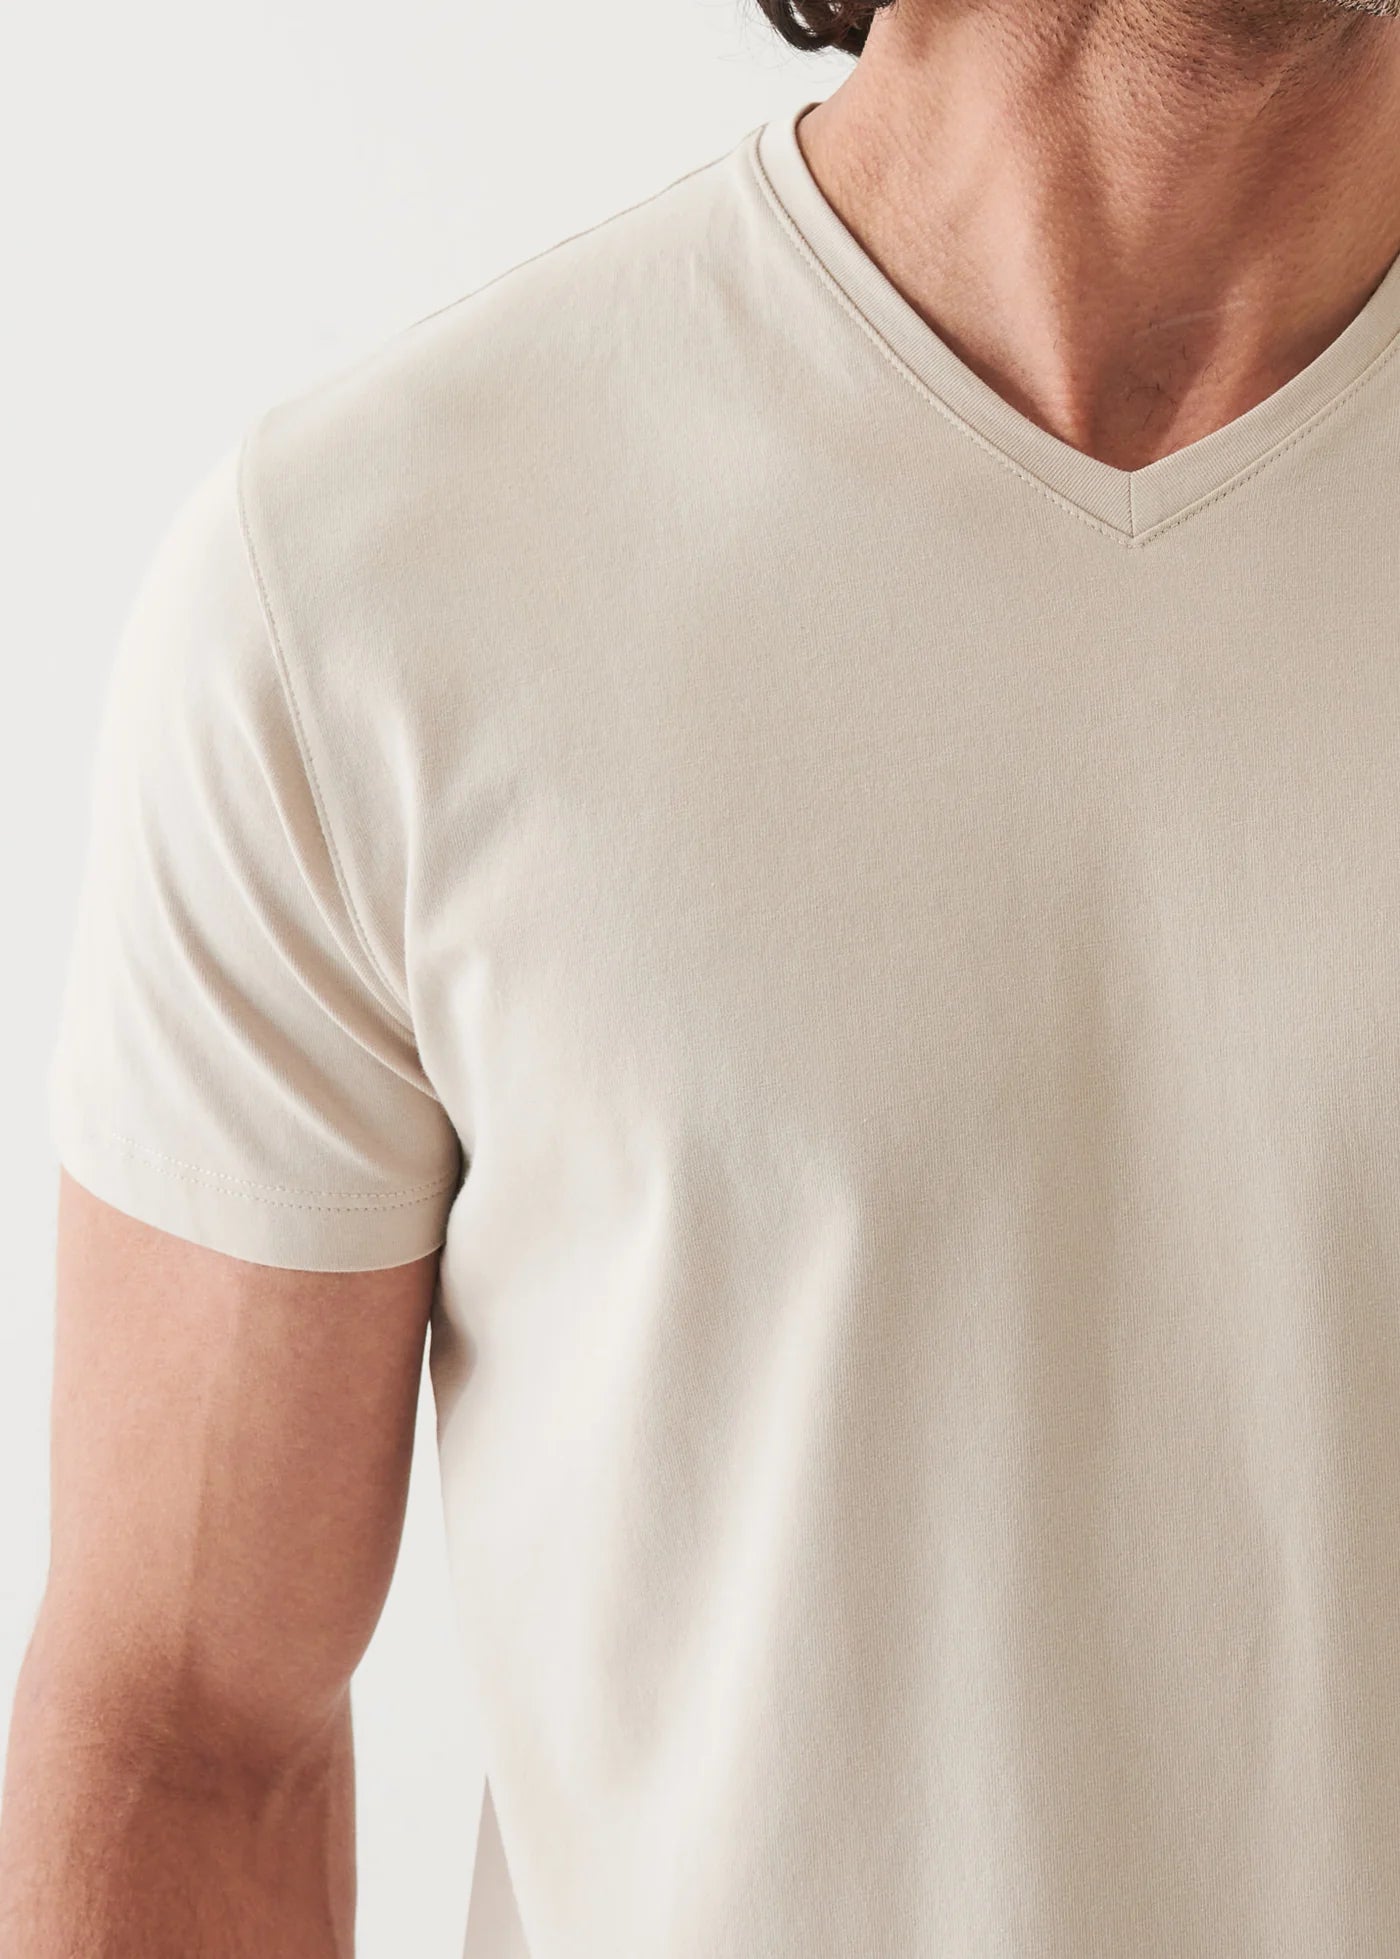 Patrick Assaraf Iconic V-Neck Pima Cotton Stretch T-Shirt in Wheat